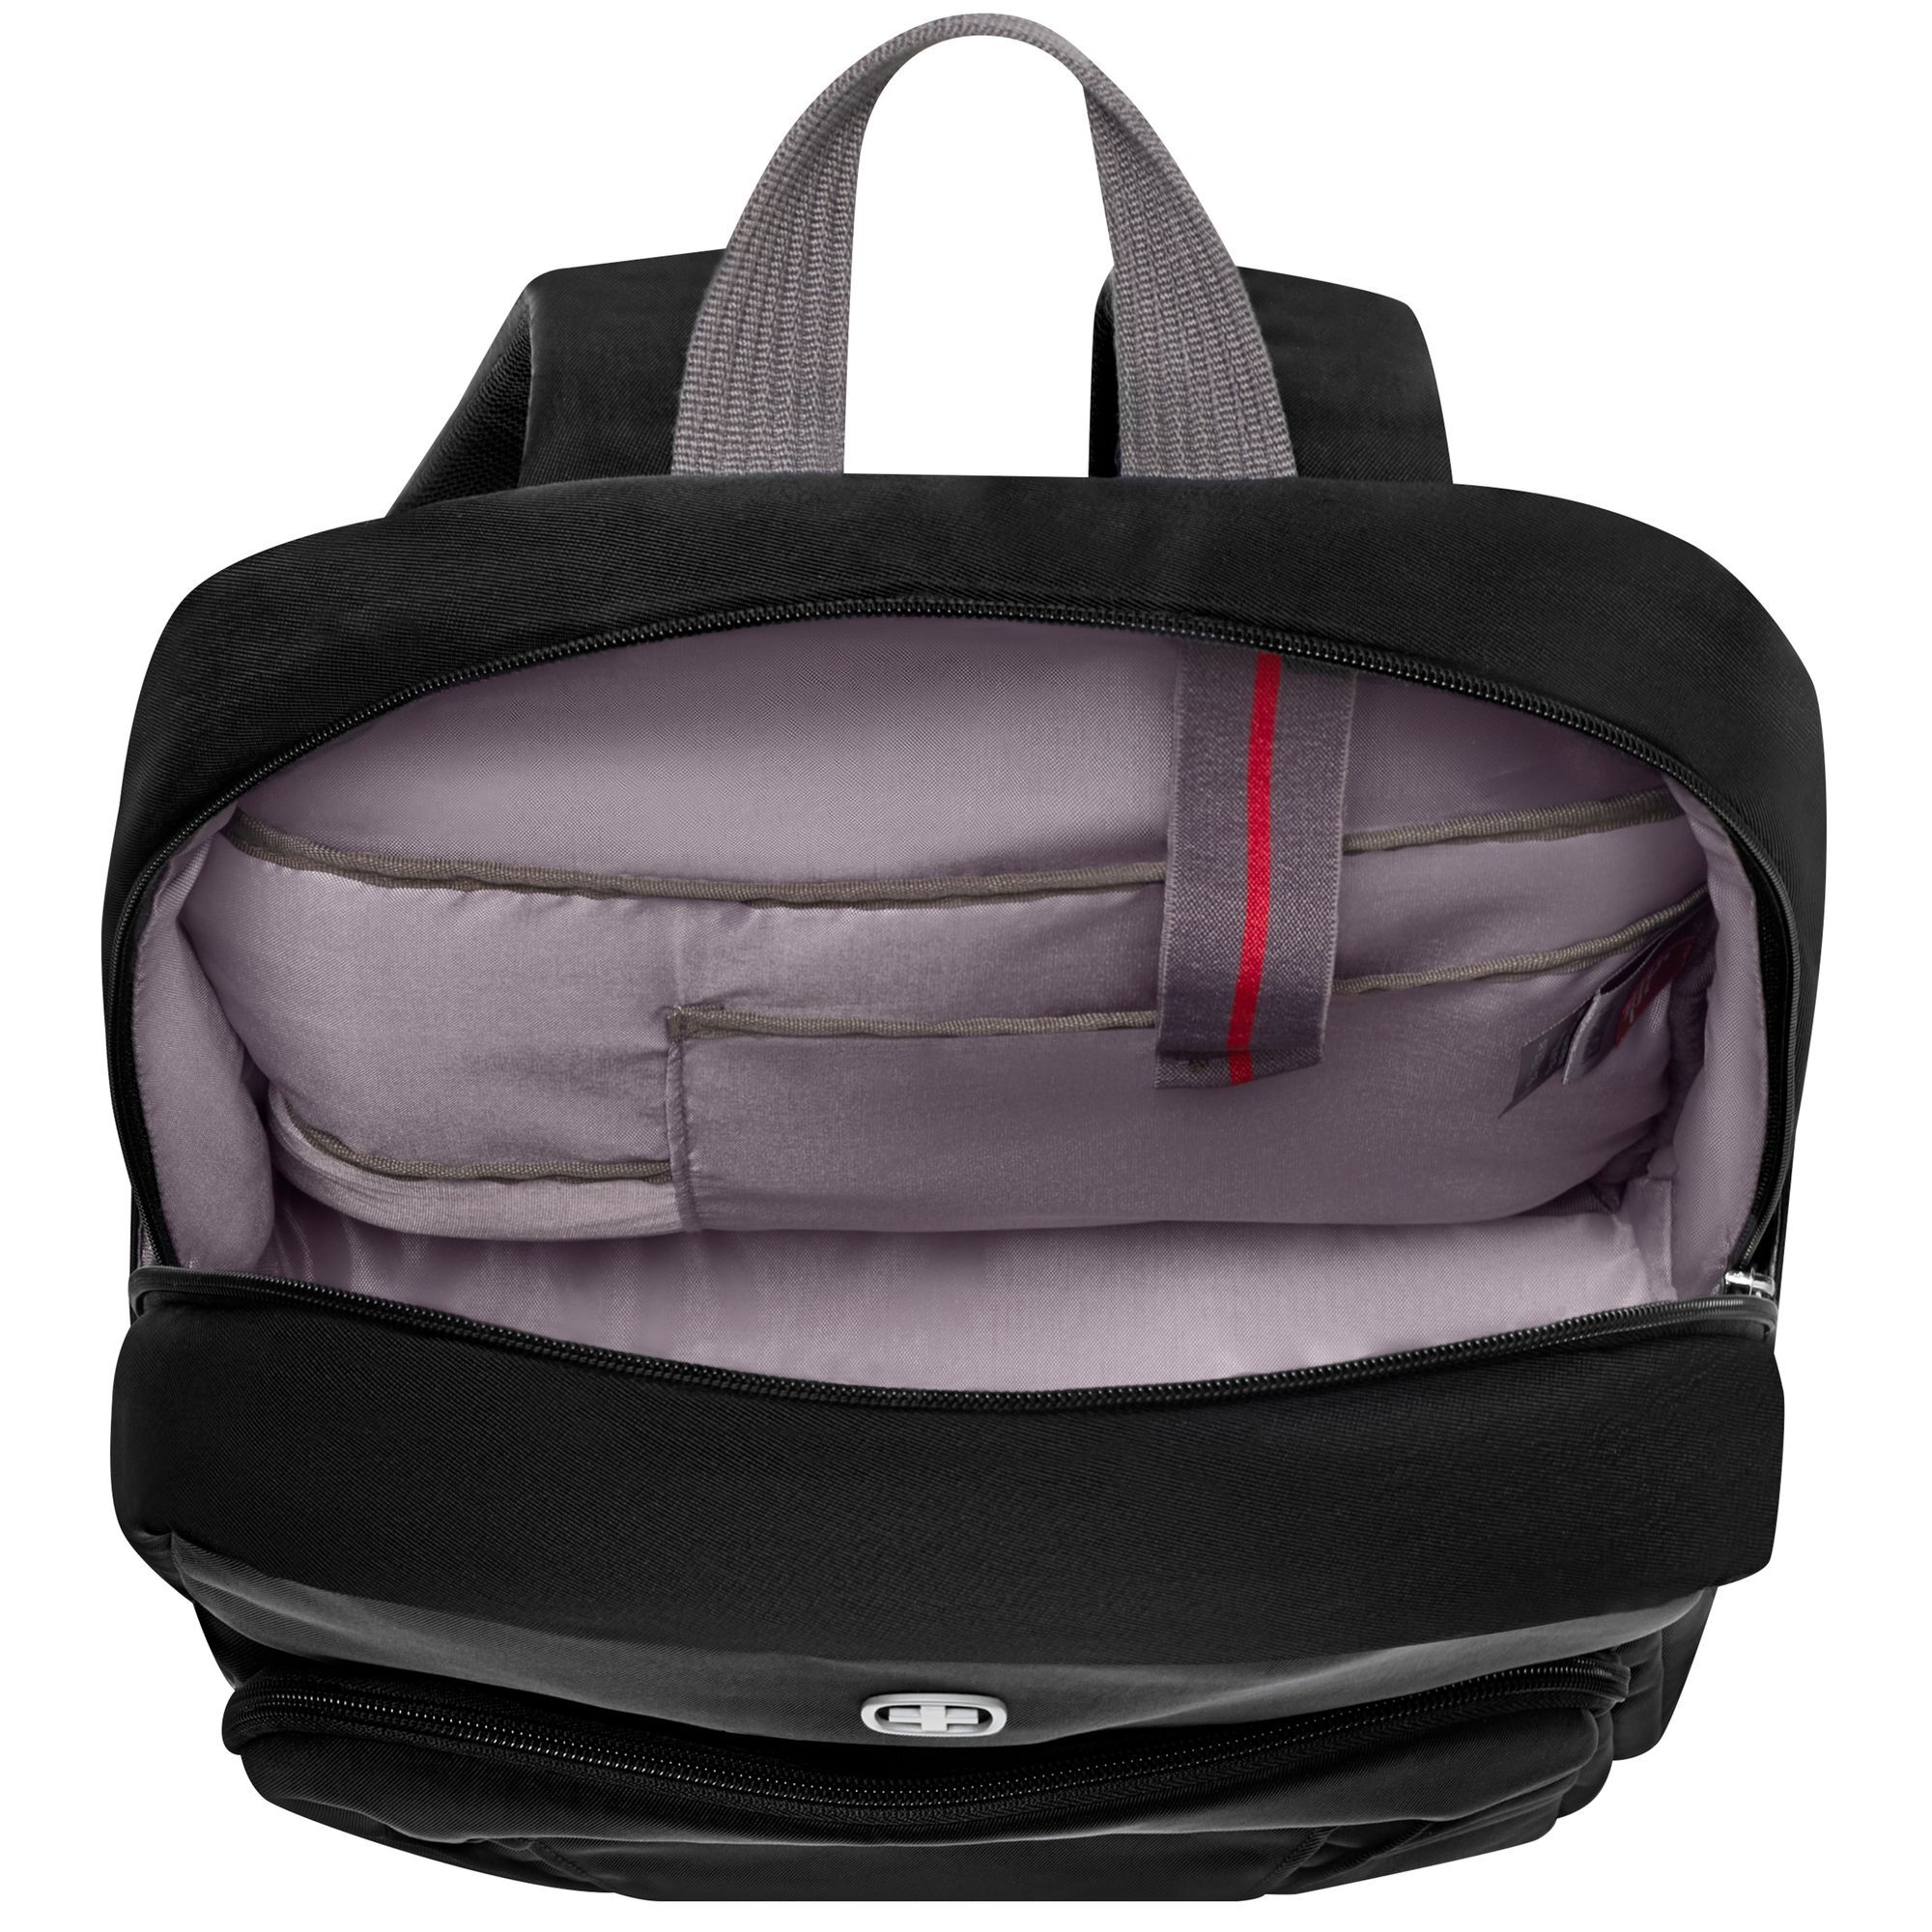 Рюкзак Wenger Motion 42 cm Laptopfach, шикарный черный рюкзак wenger reload 14 42 cm laptopfach черный